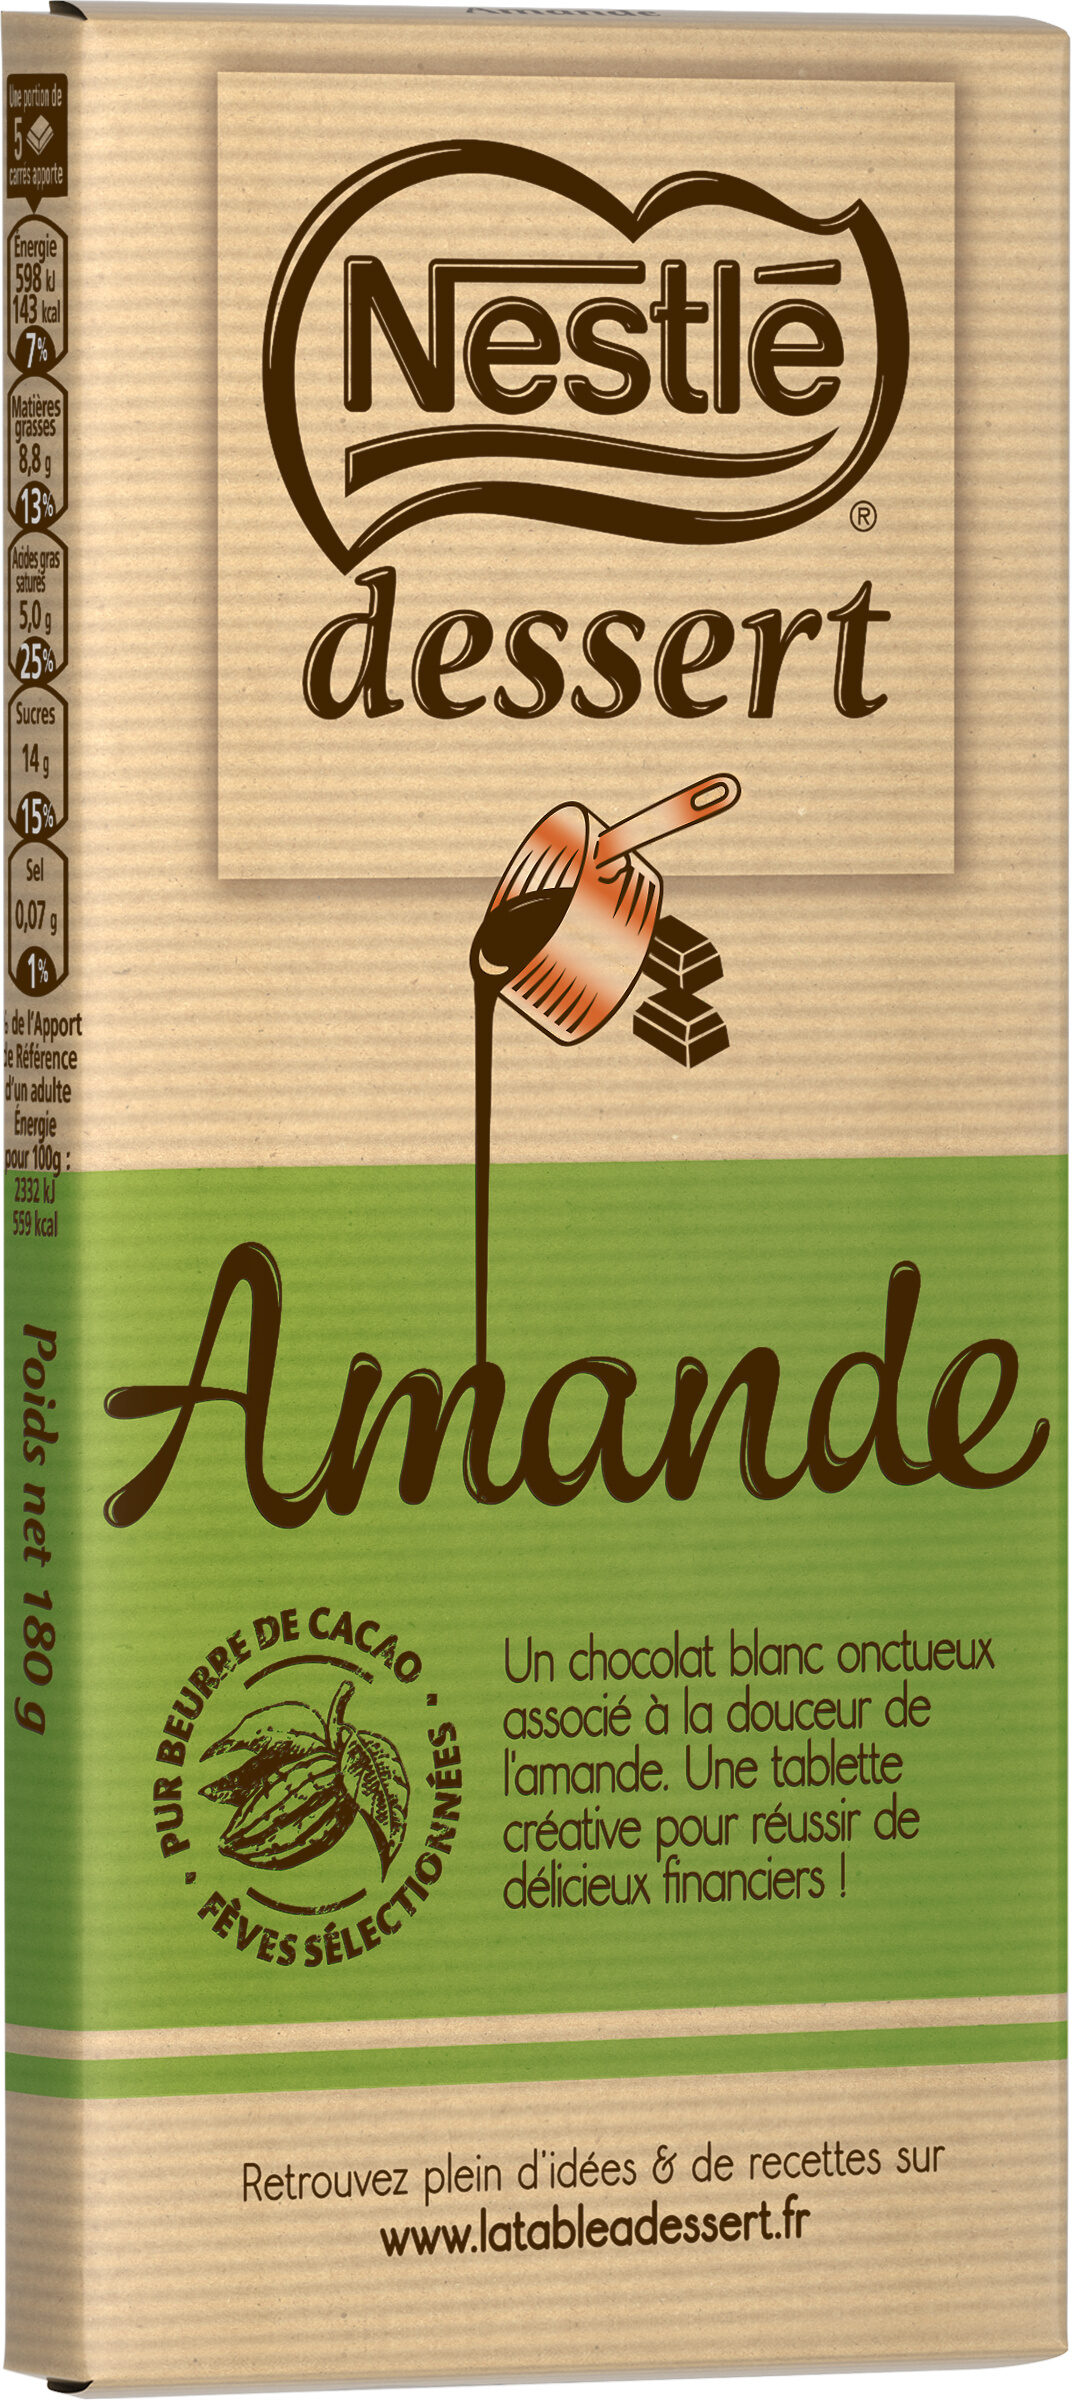 NESTLE DESSERT Chocolat Blanc Amande - Produkt - fr